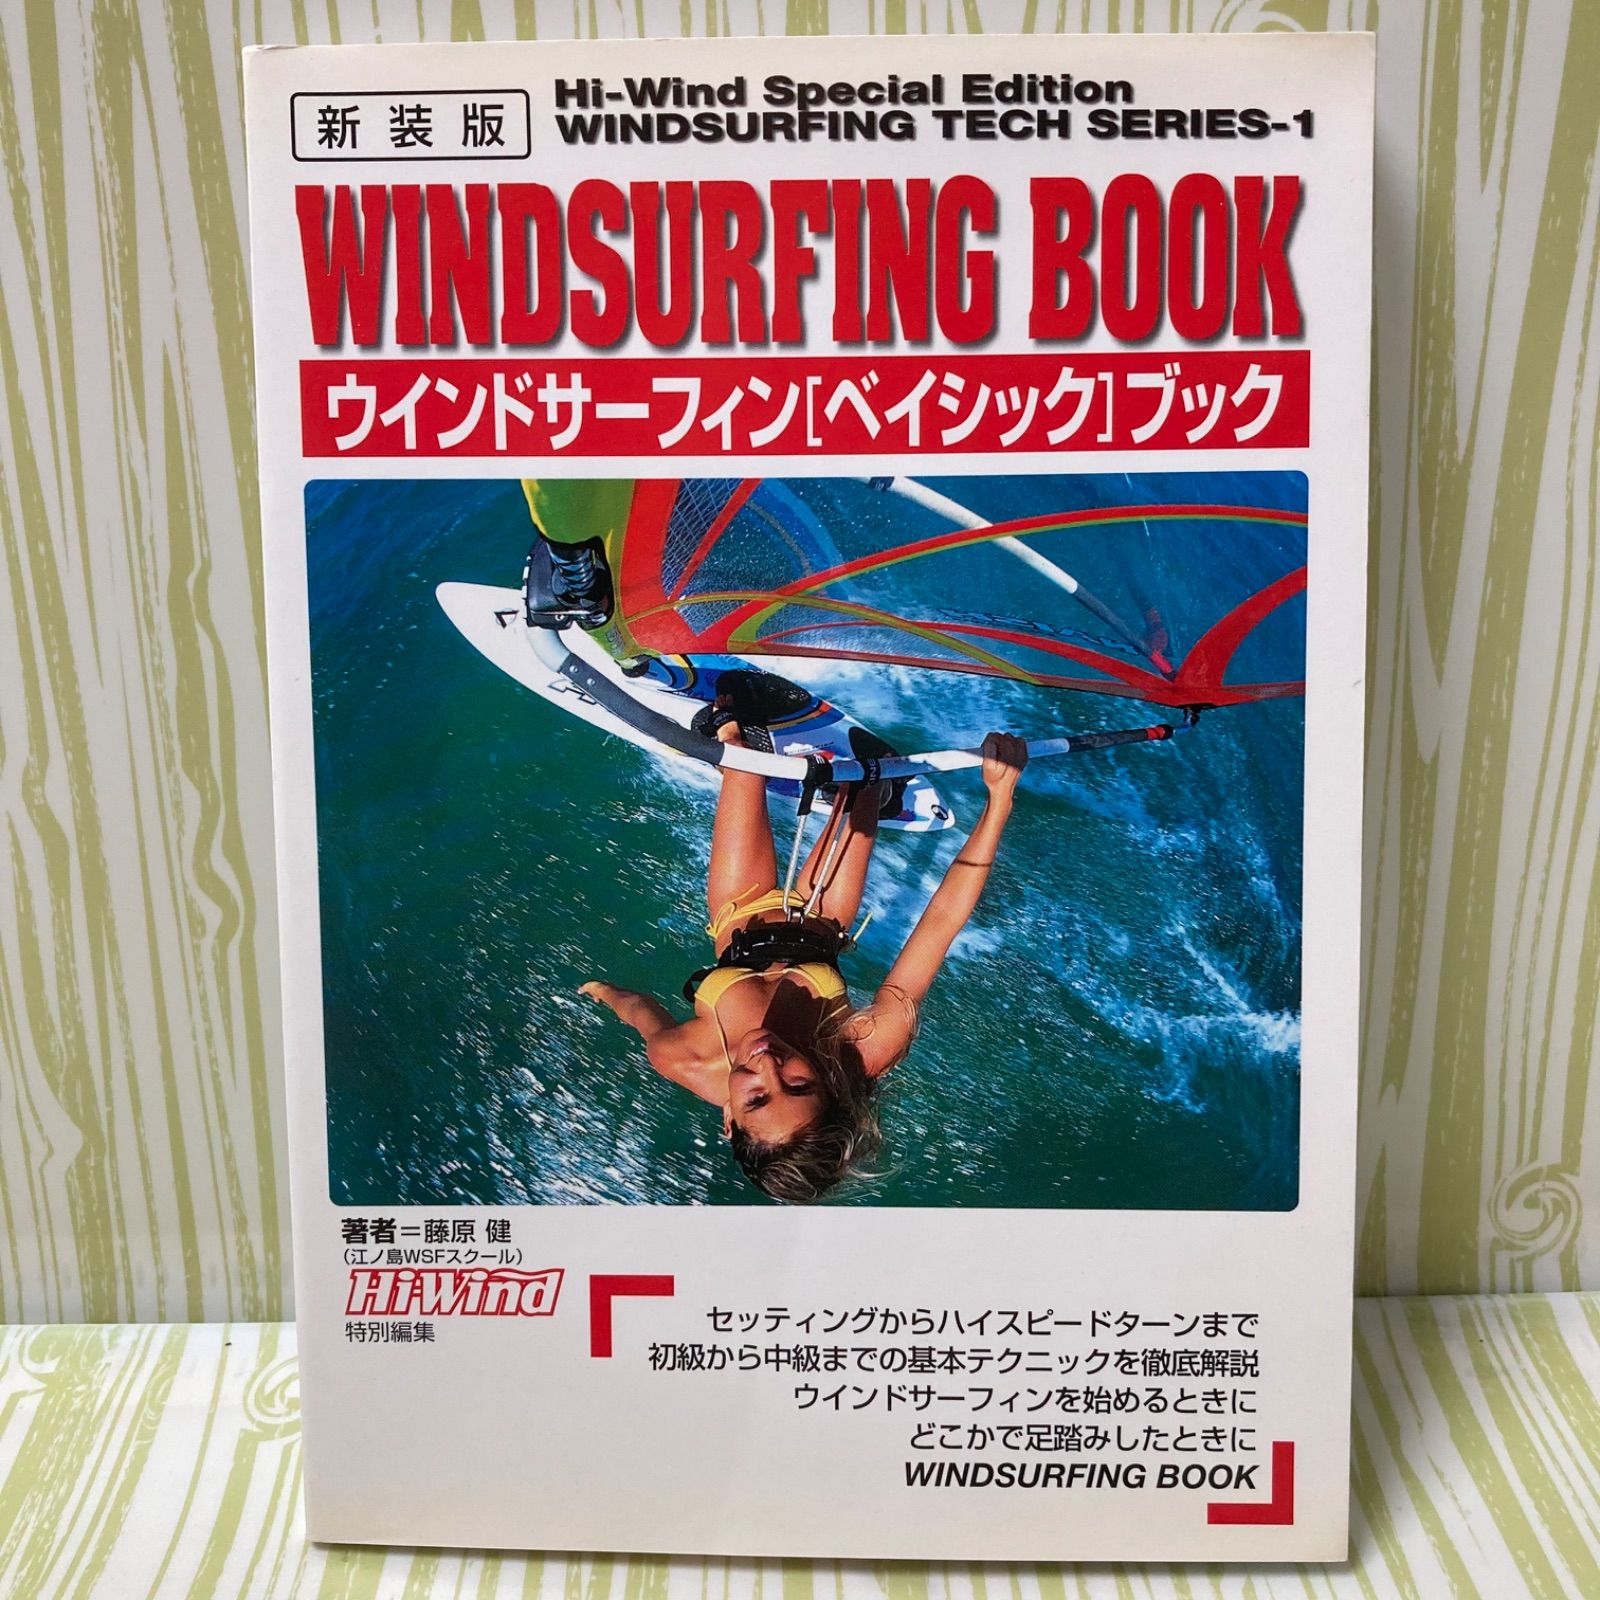 Hi-Wind ウィンドサーフィン 本 雑誌 - 趣味